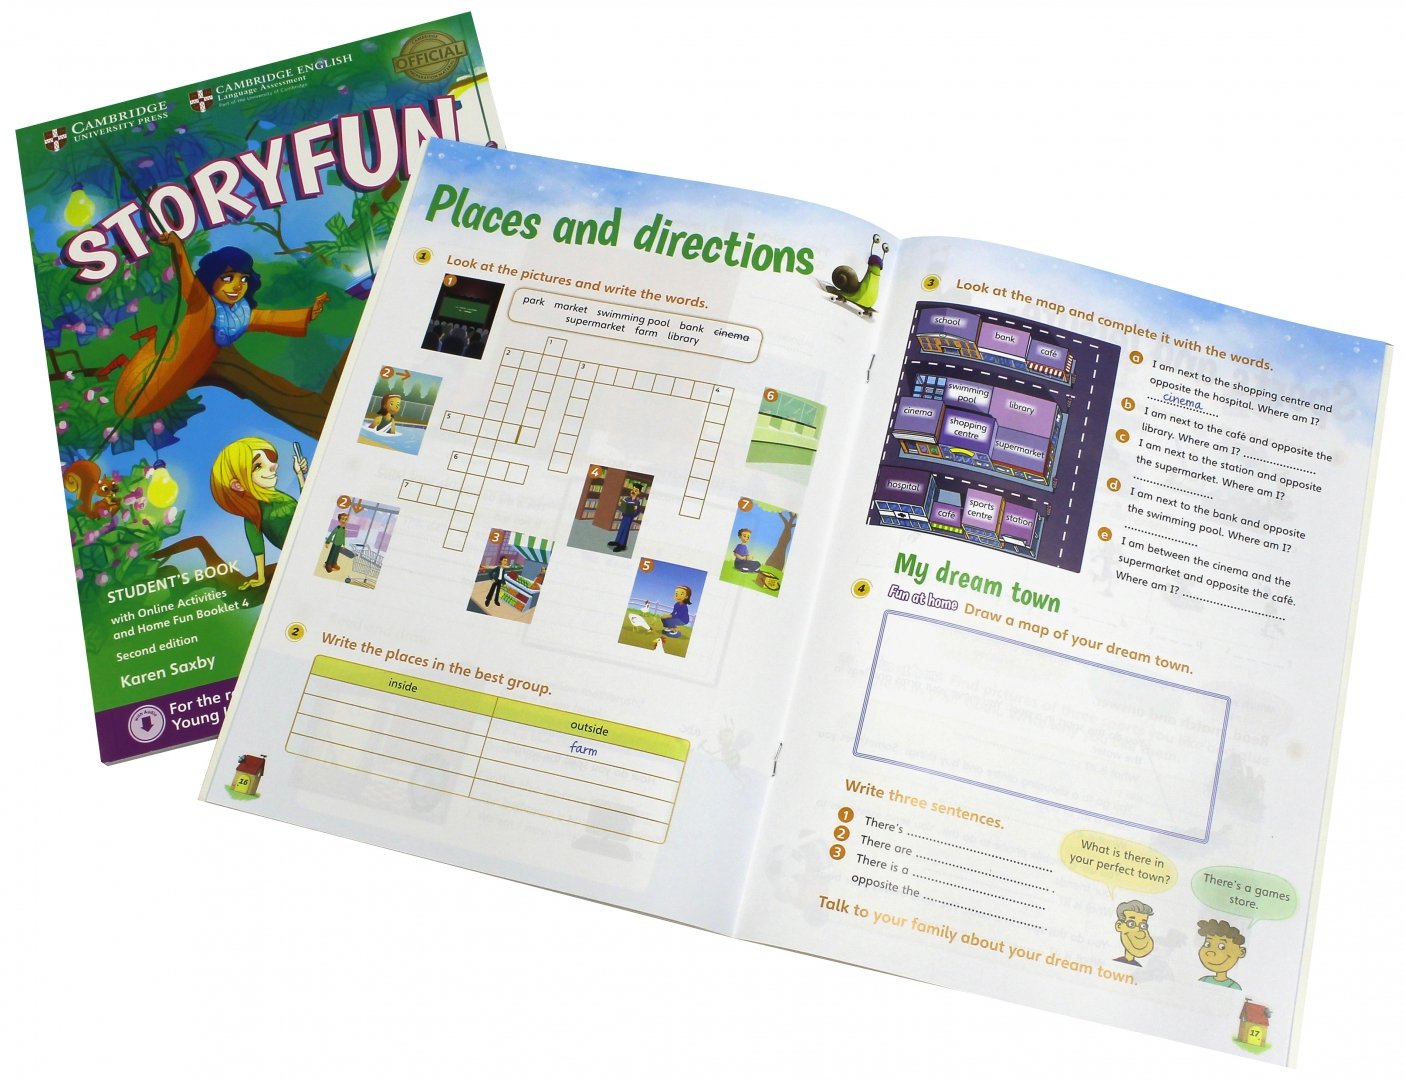 Иллюстрация 1 из 18 для Storyfun for Starters. Level 4. Student's Book with Online Activities and Home Fun Booklet 4 - Saxby, Ritter | Лабиринт - книги. Источник: Лабиринт